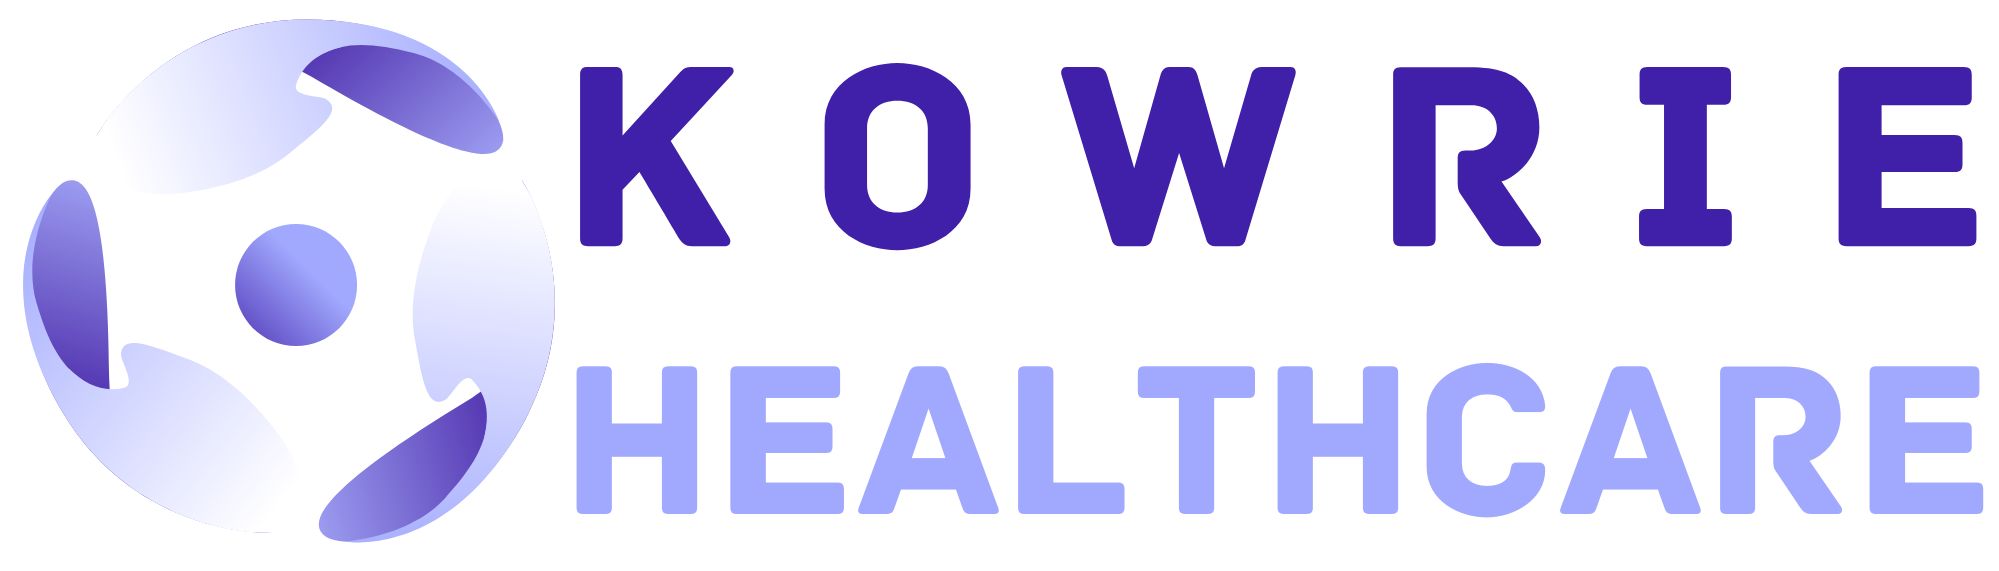 Kowrie Healthcare - Logo